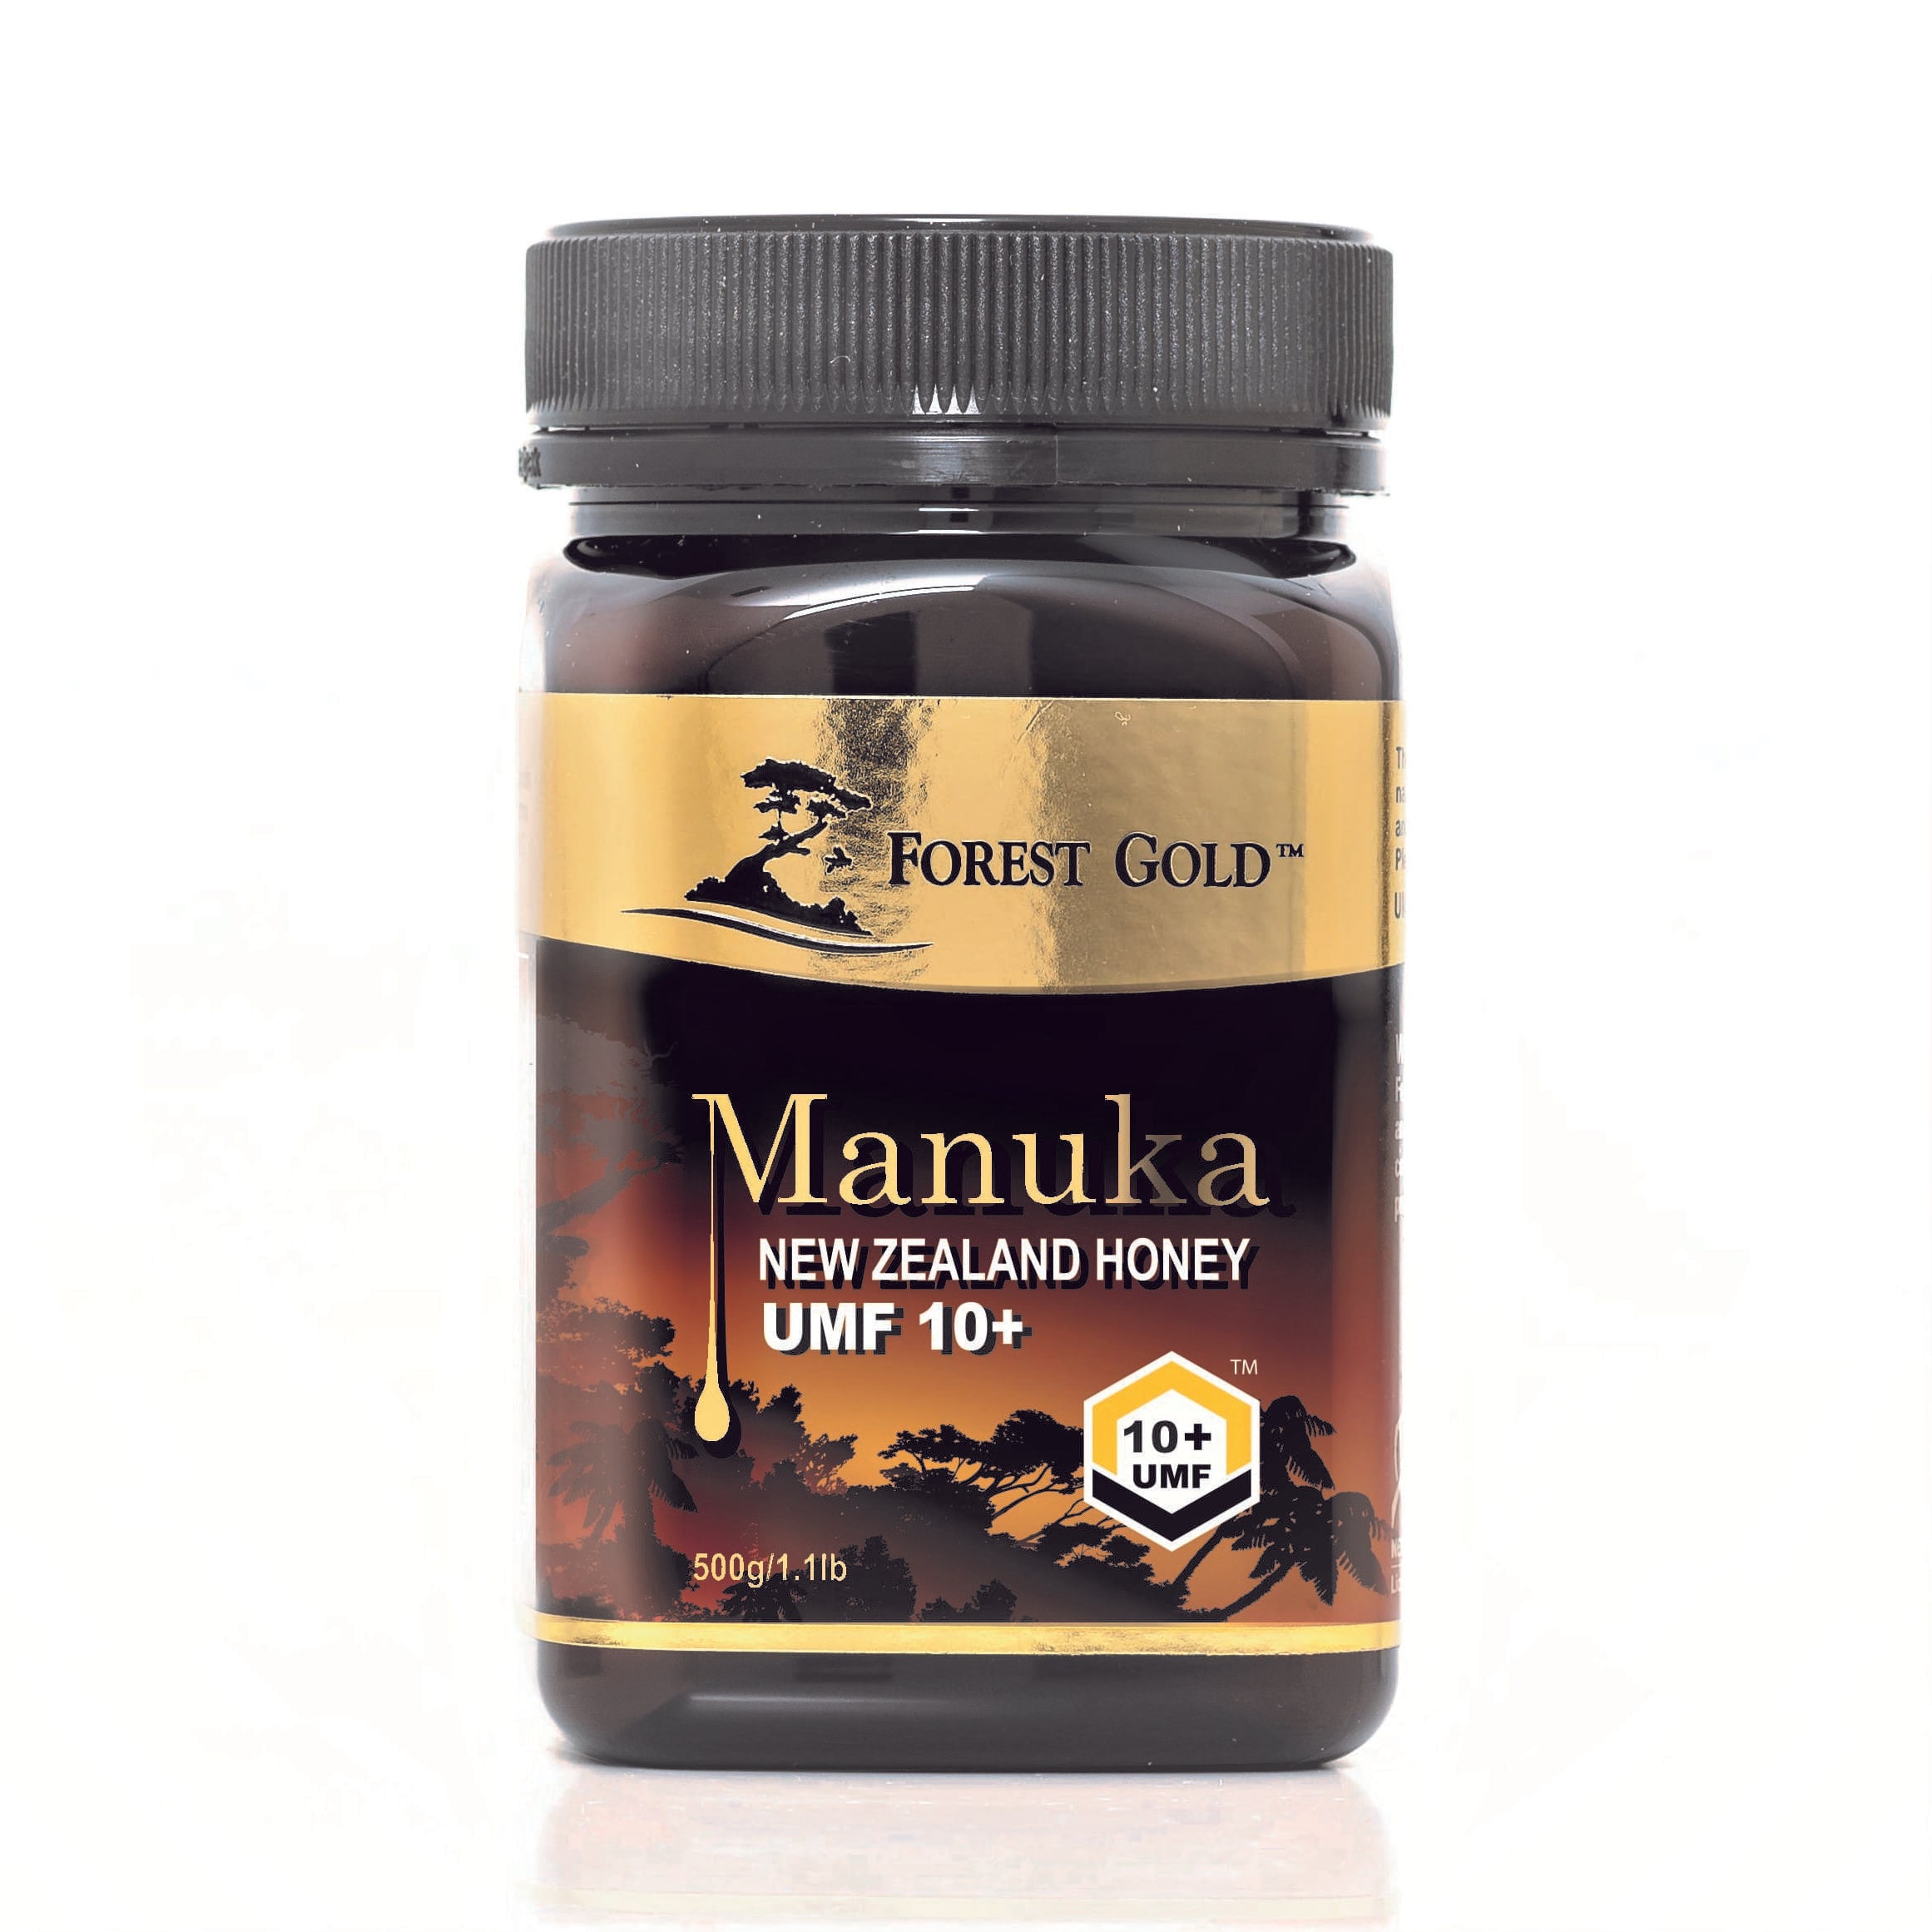 Forest Gold Manuka UMF 10+ Certified NZ Honey- 500g Manuka Honey Organichub   